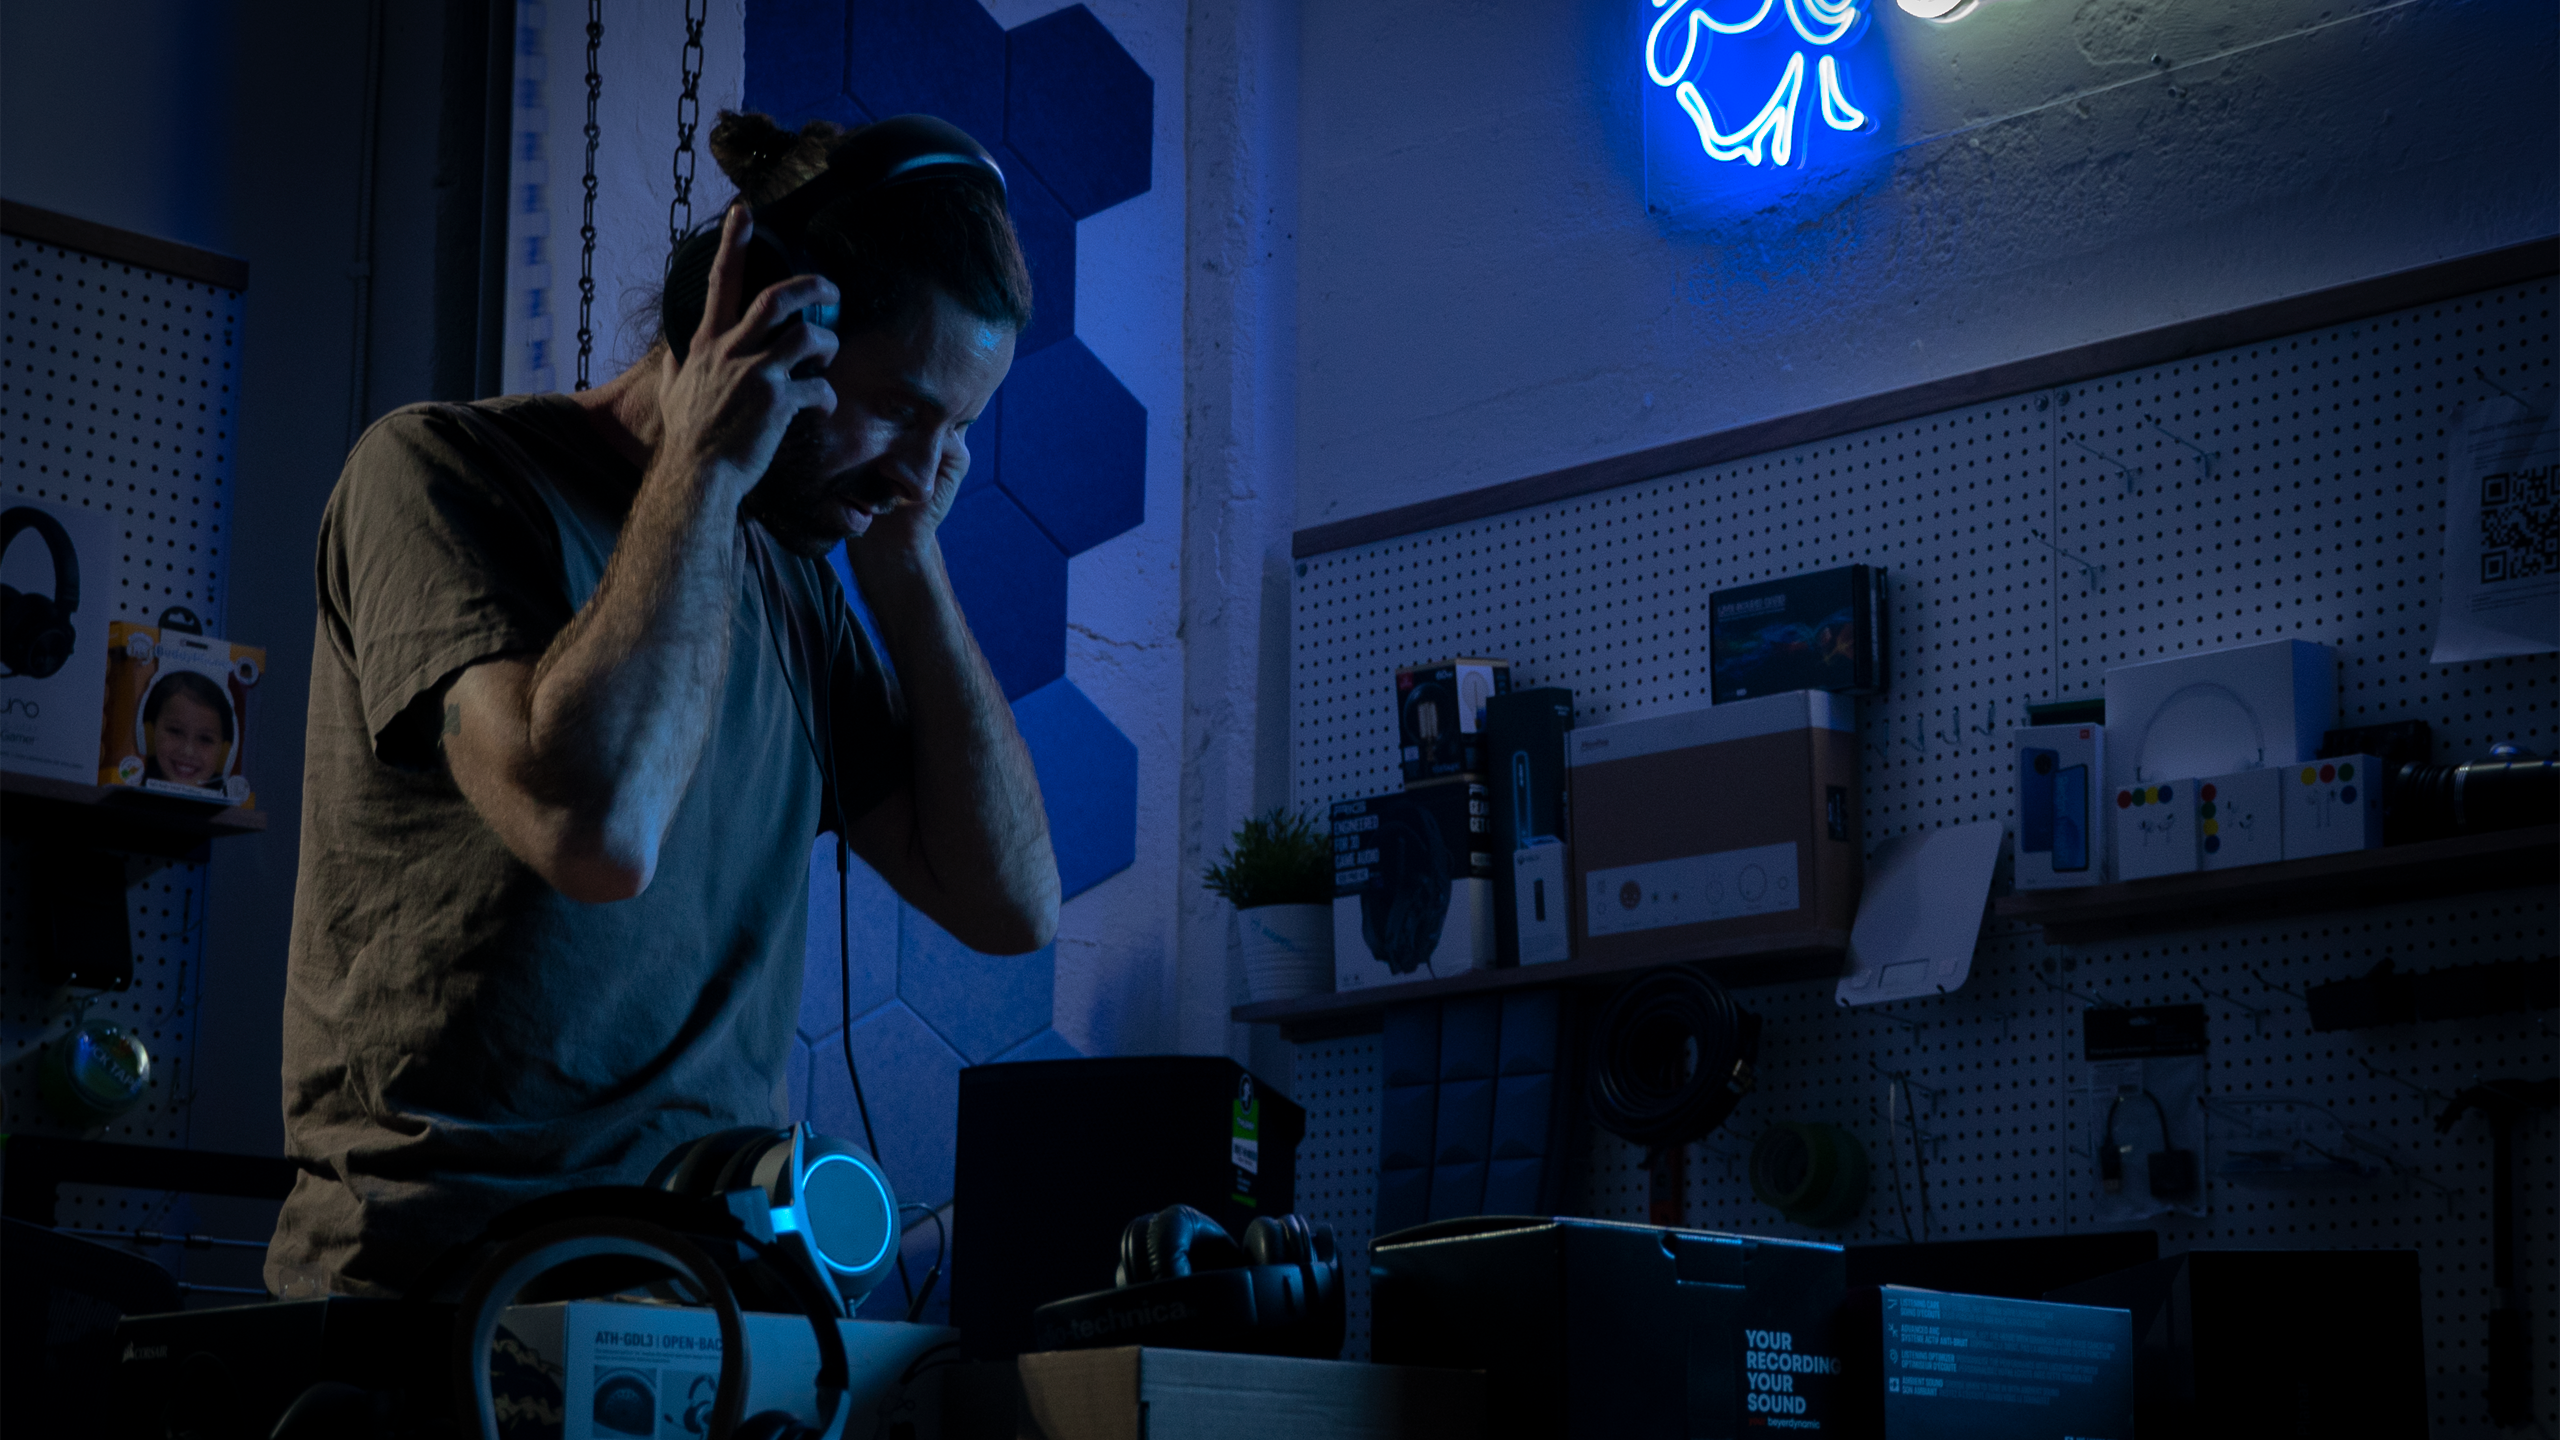 A photo of AJ Wykes listening to headphones in a dark room.